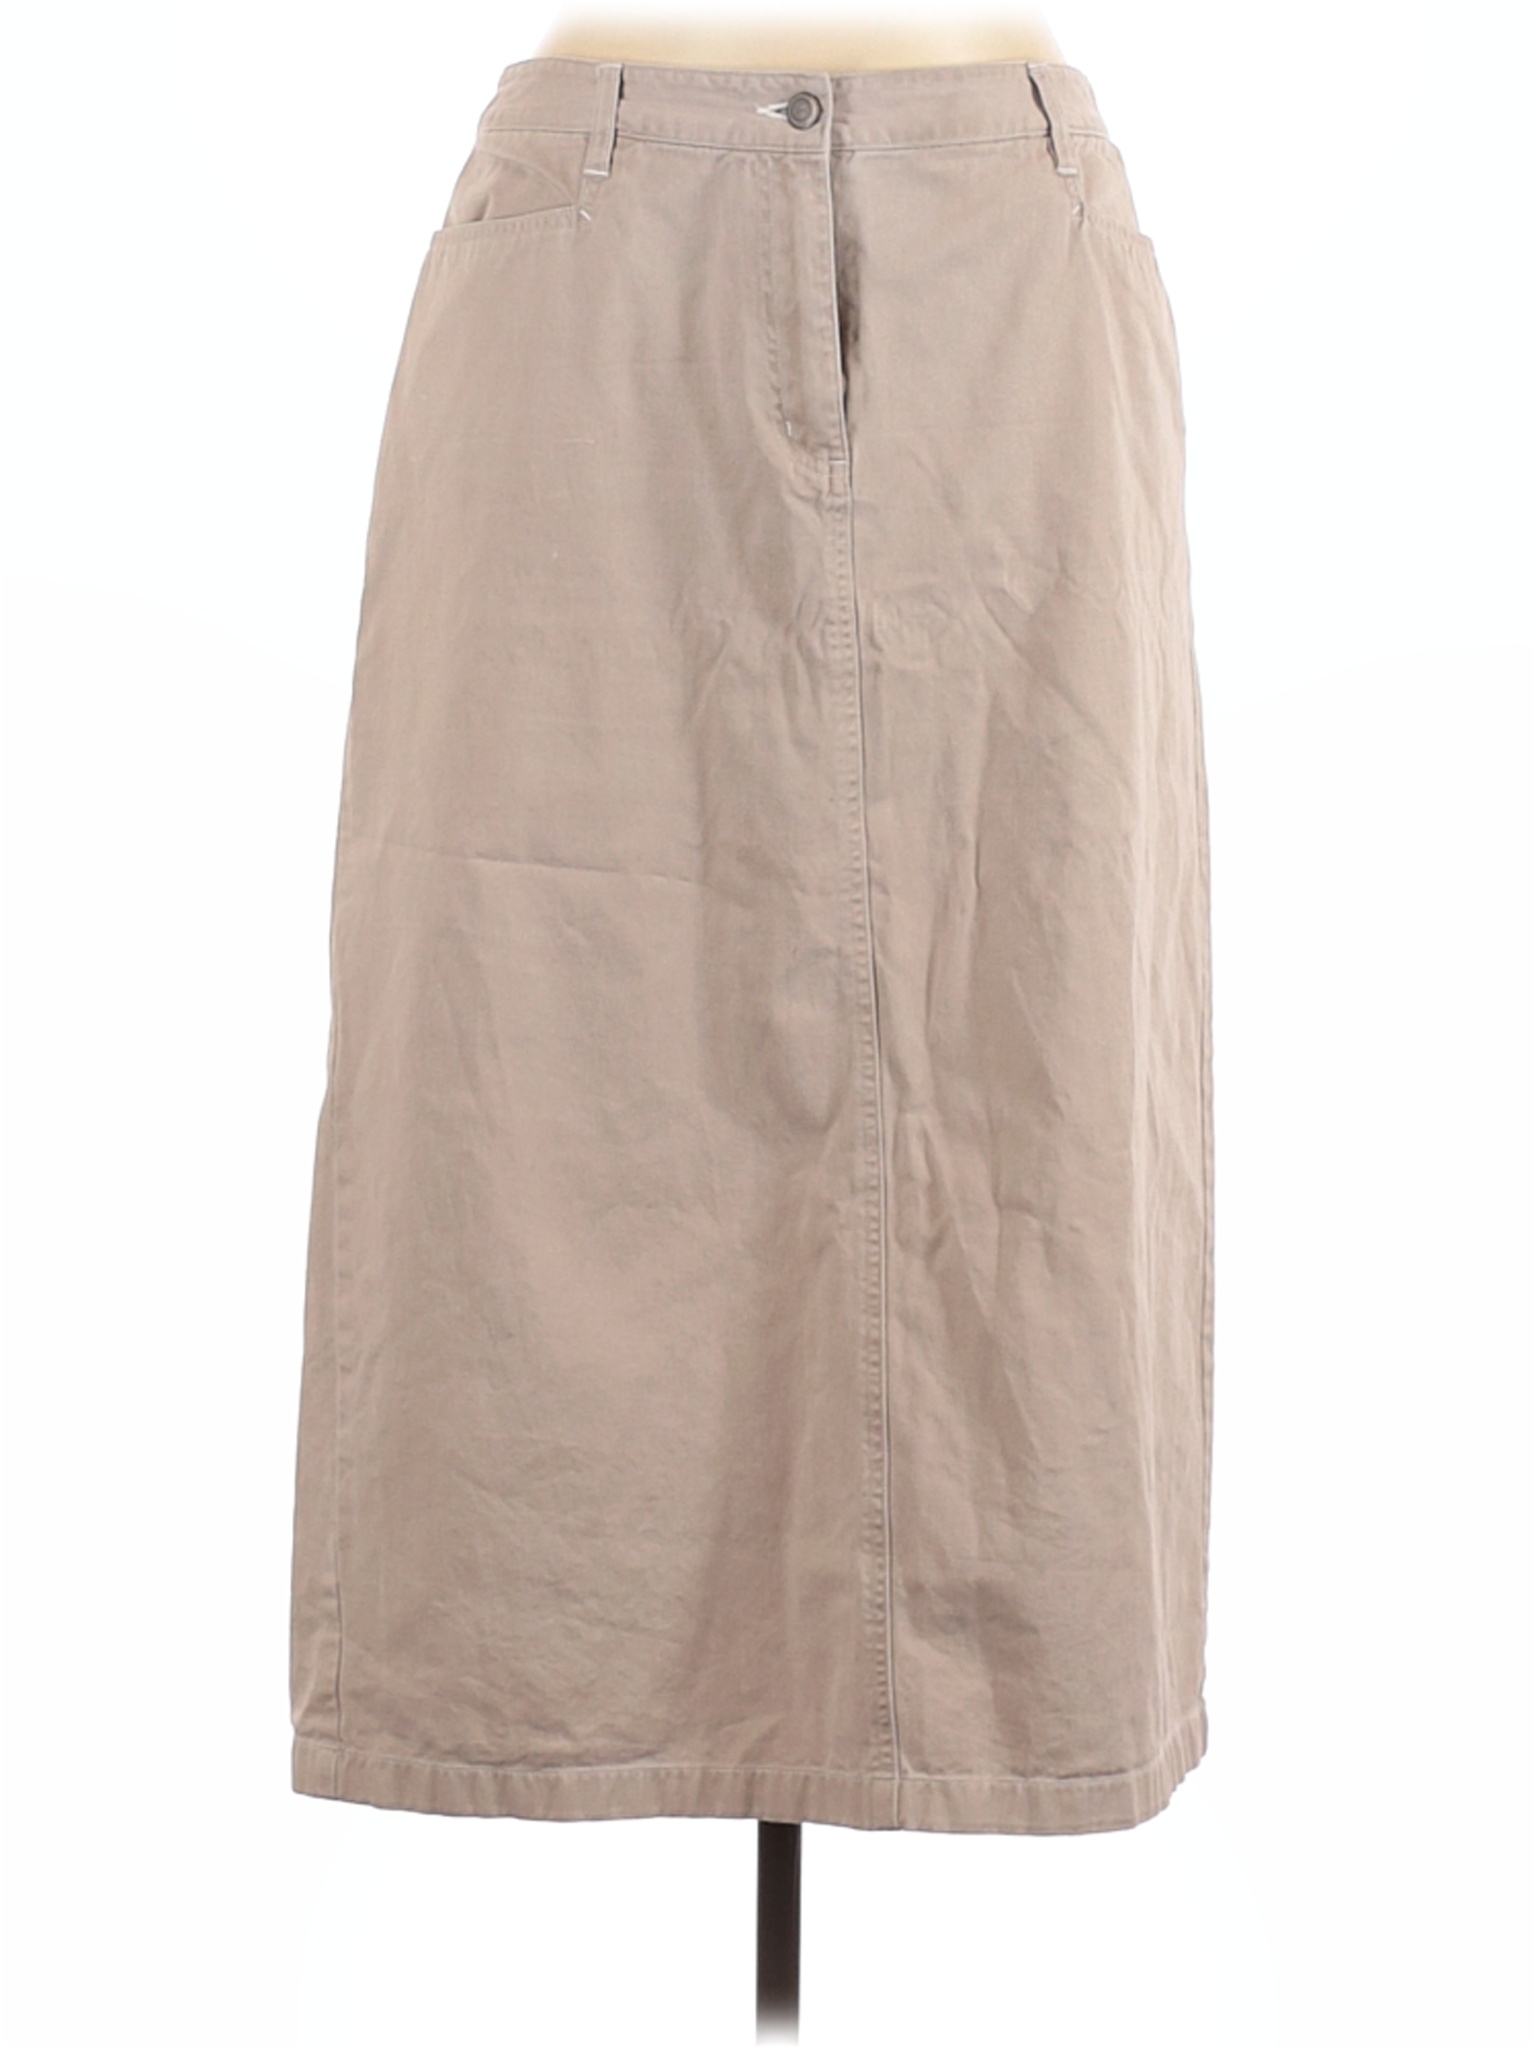 Style&Co Women Brown Casual Skirt 12 | eBay